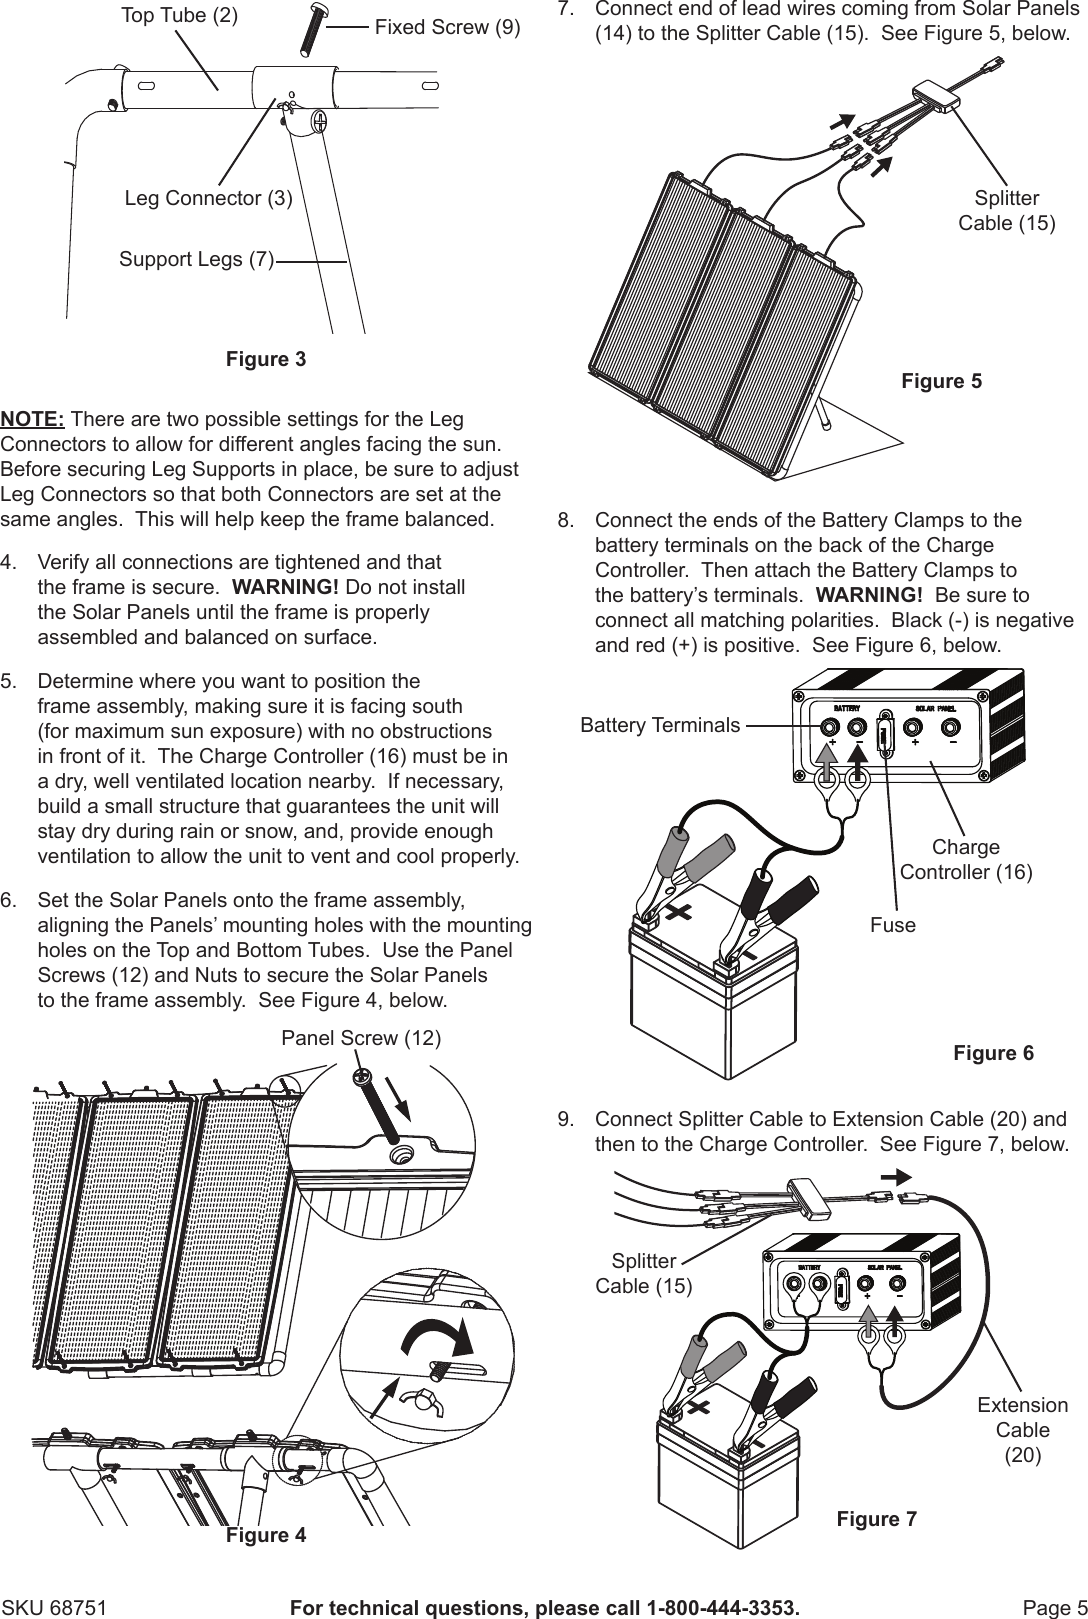 Page 5 of 11 - Harbor-Freight Harbor-Freight-45-Watt-Solar-Panel-Kit-Product-Manual-  Harbor-freight-45-watt-solar-panel-kit-product-manual